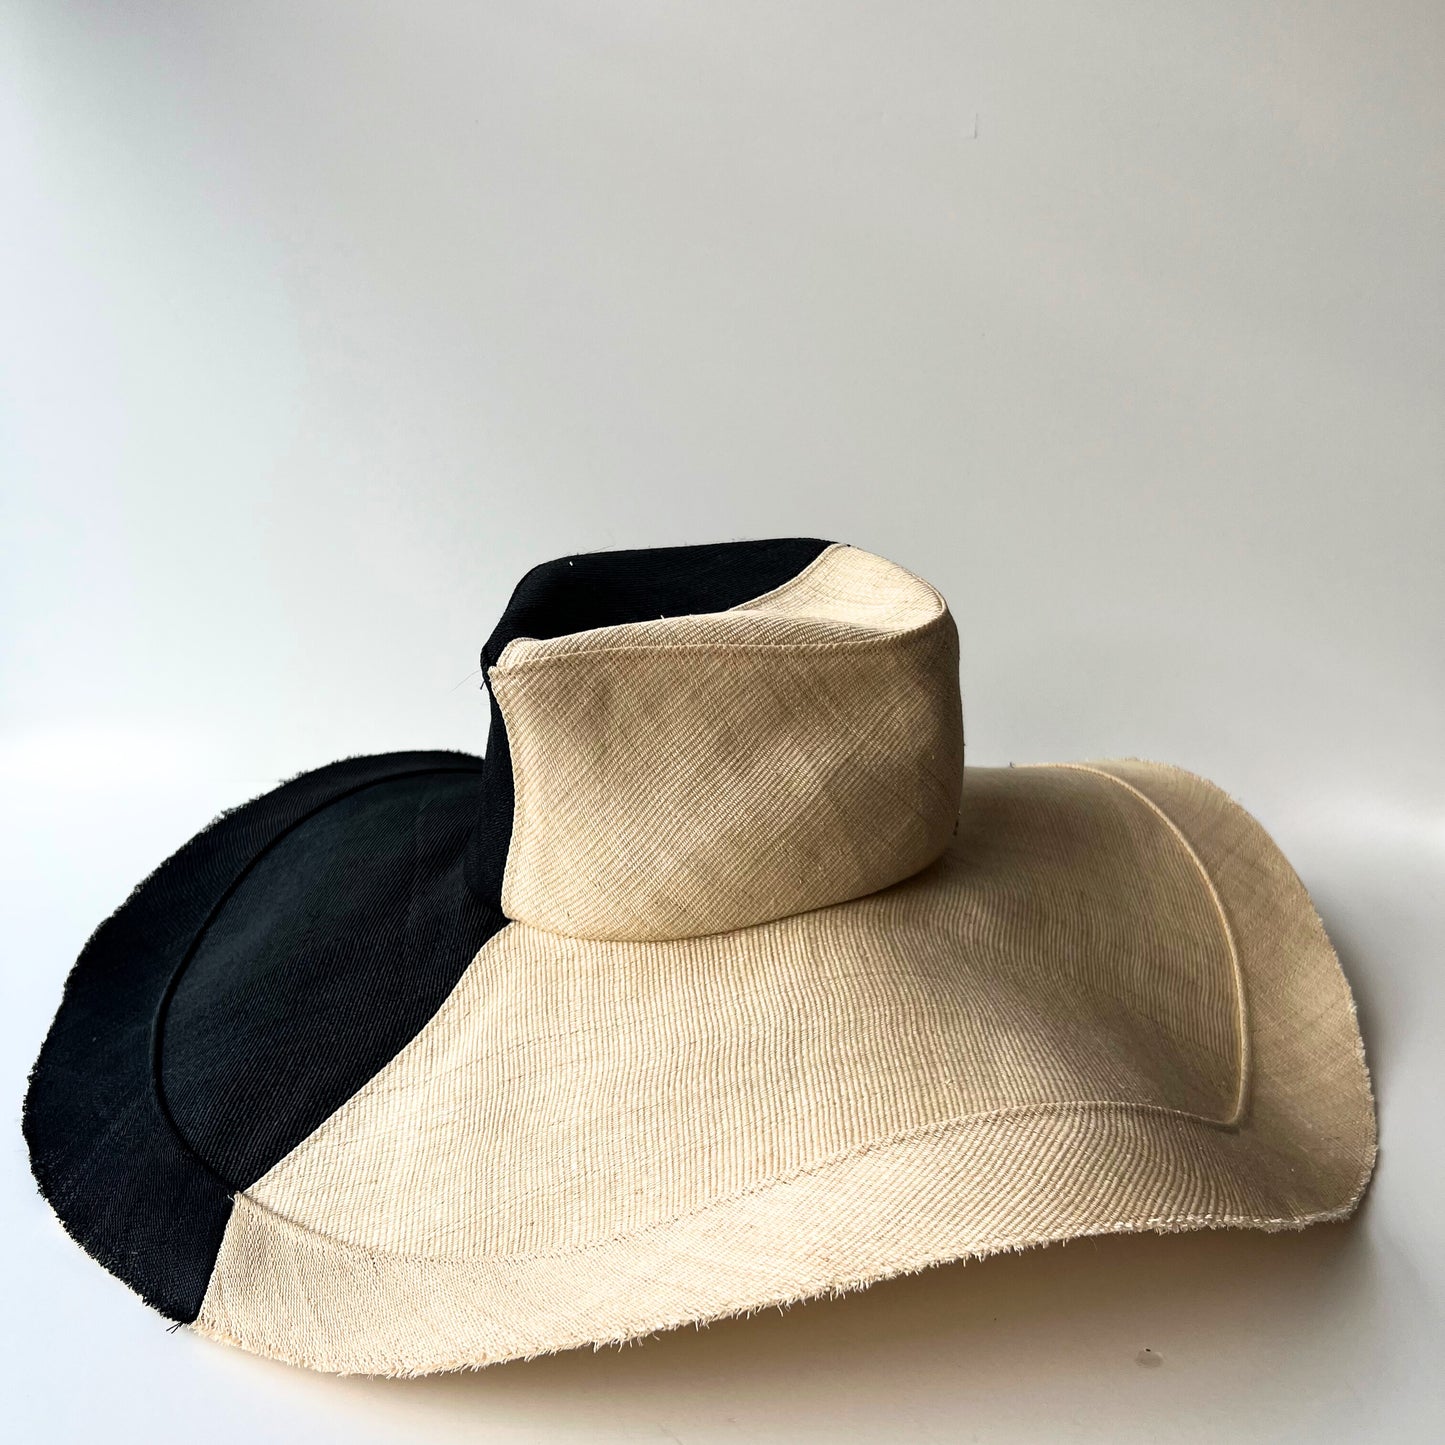 Claude Sun Hat: Black and White Duo